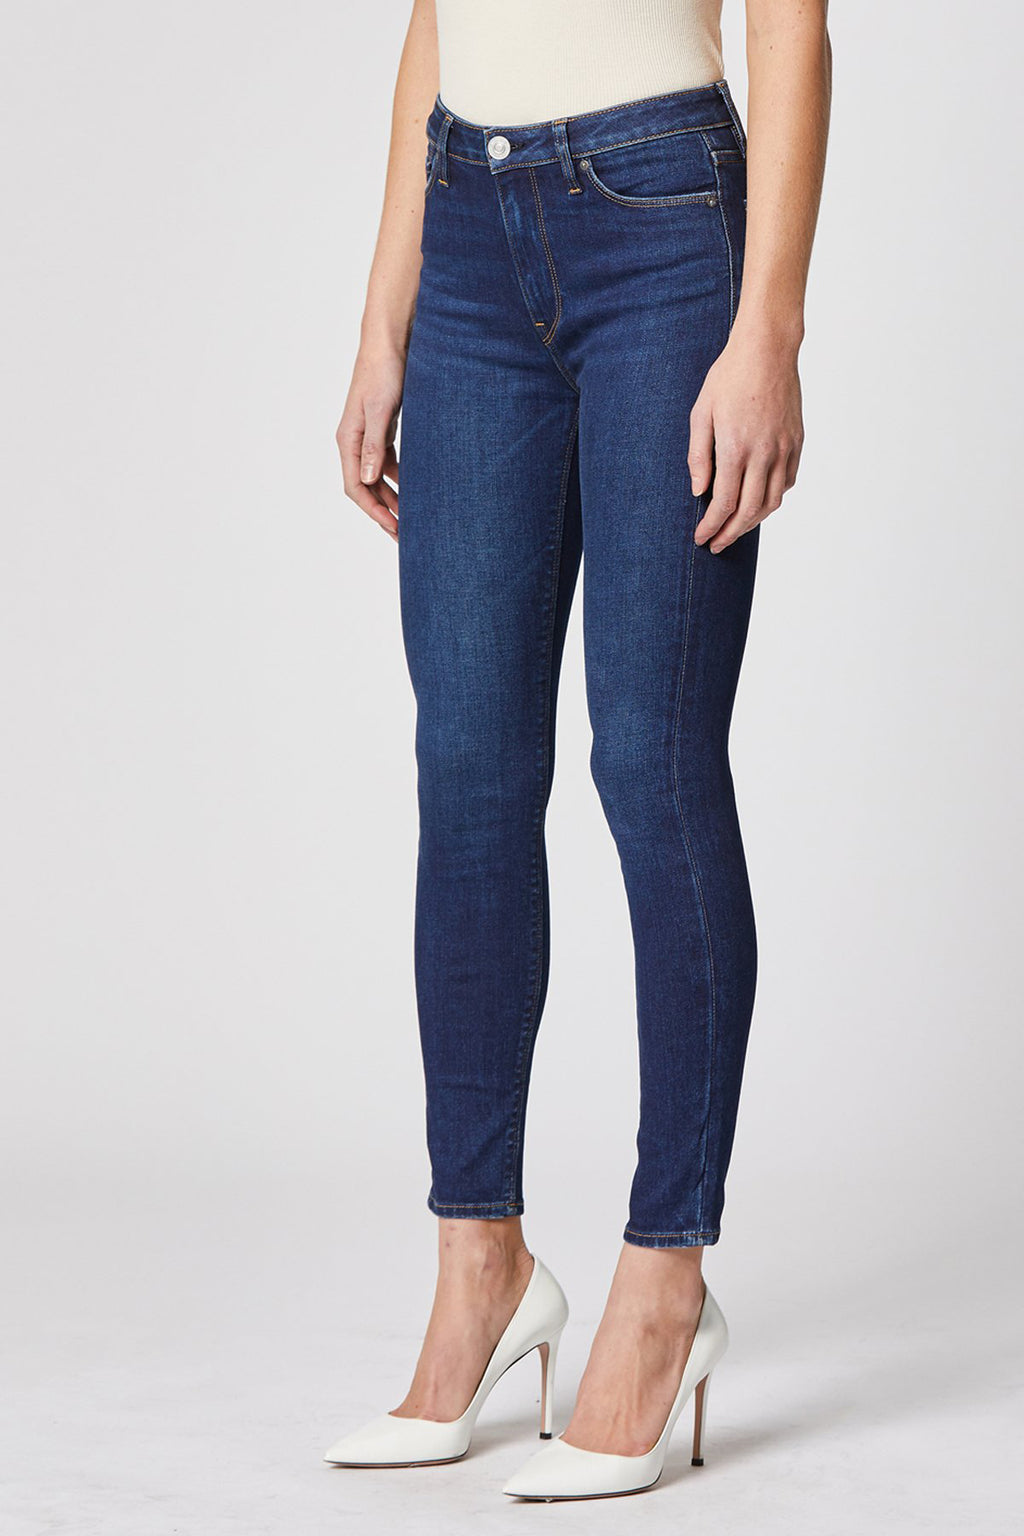 Shop Women's Denim High-Rise at Hudson Jeans | Hudson Jeans